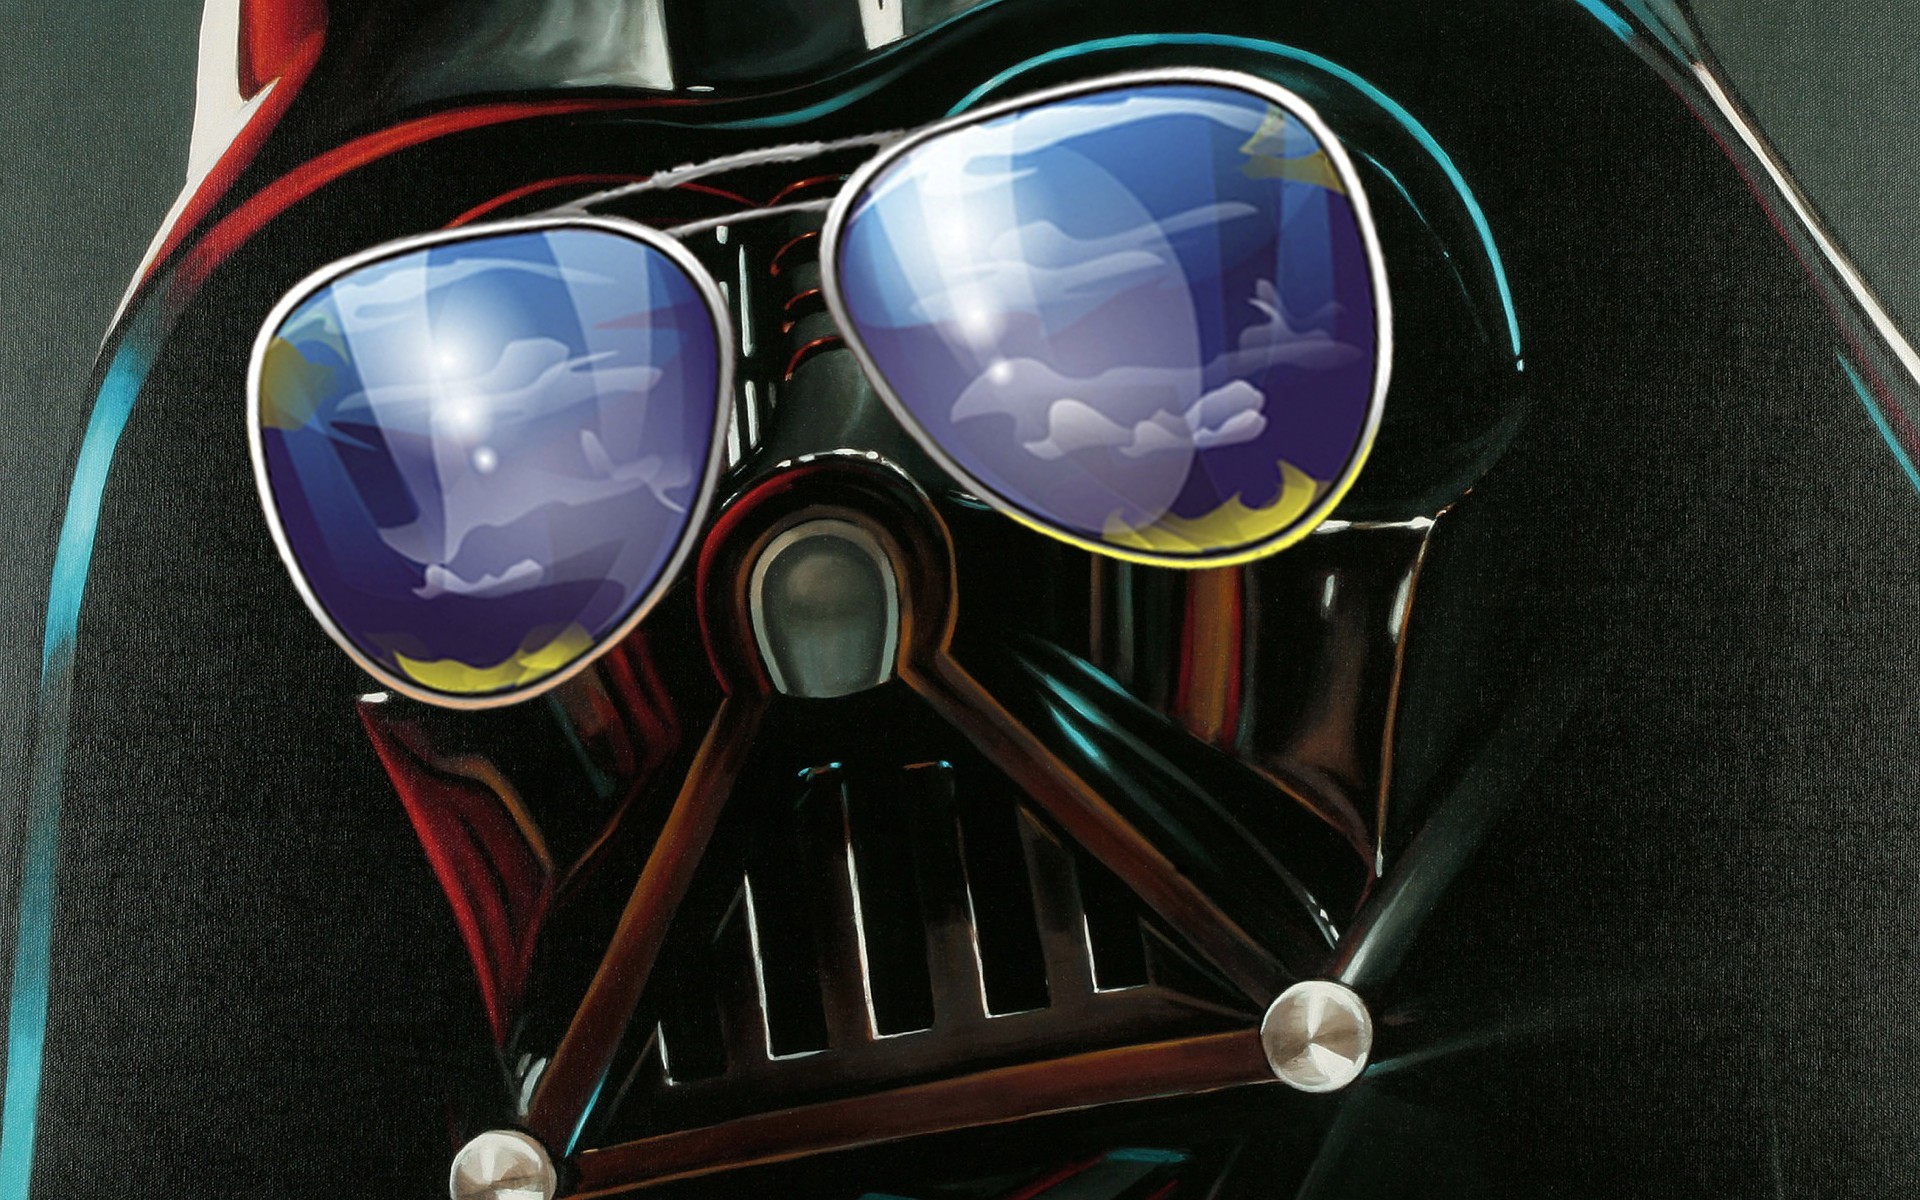 General 1920x1200 Star Wars Darth Vader humor Star Wars Humor Star Wars Villains science fiction sunglasses Sith movie characters